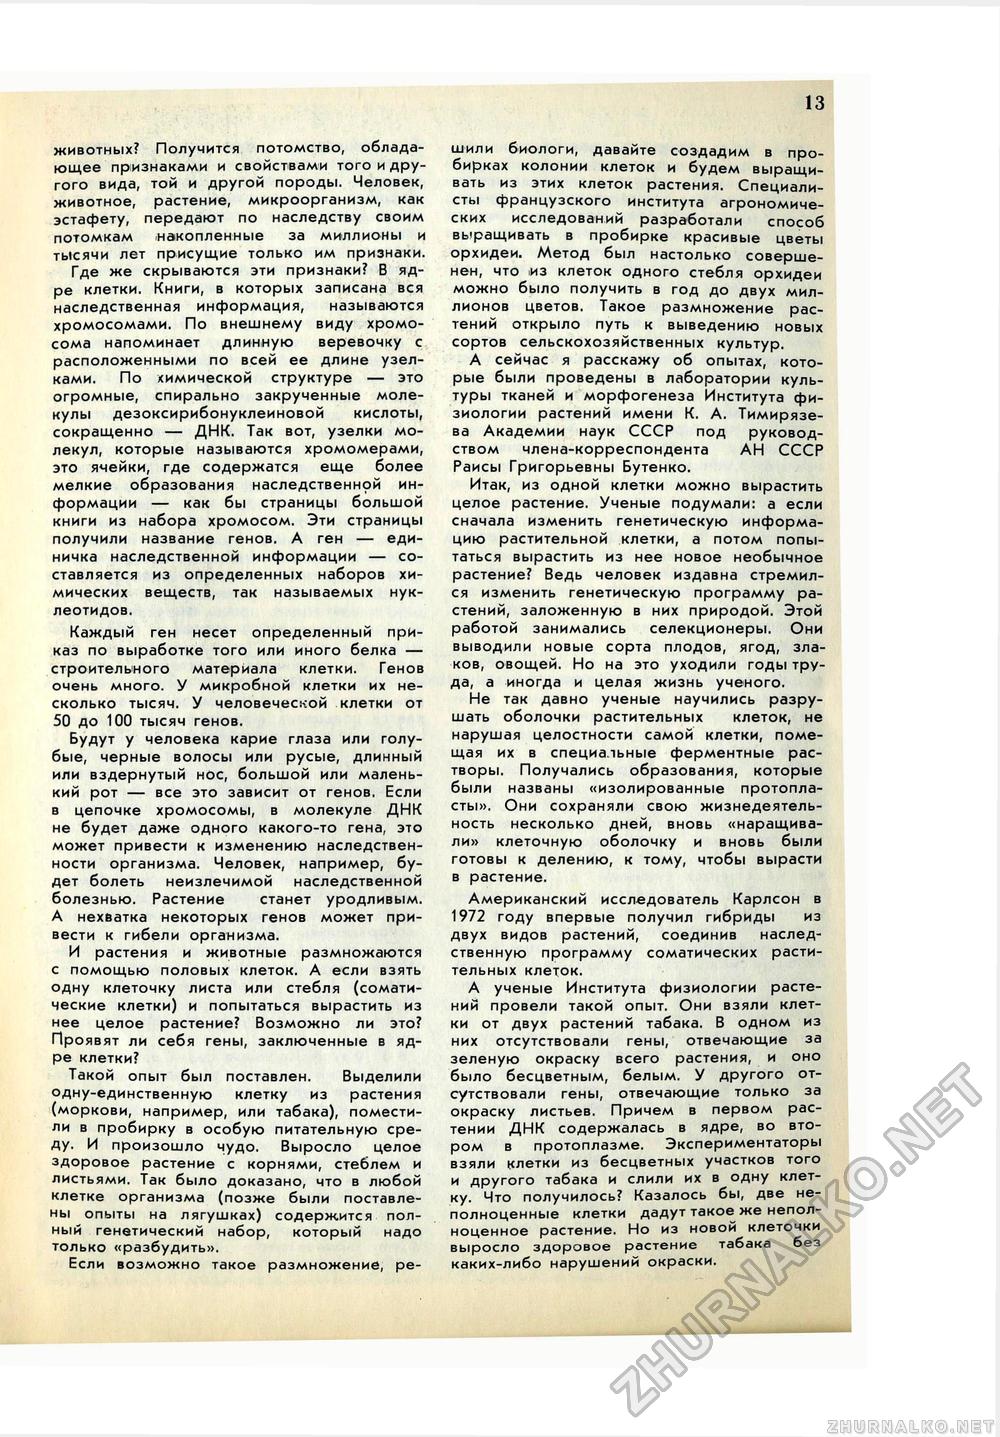 Юный Натуралист 1977-10, страница 15